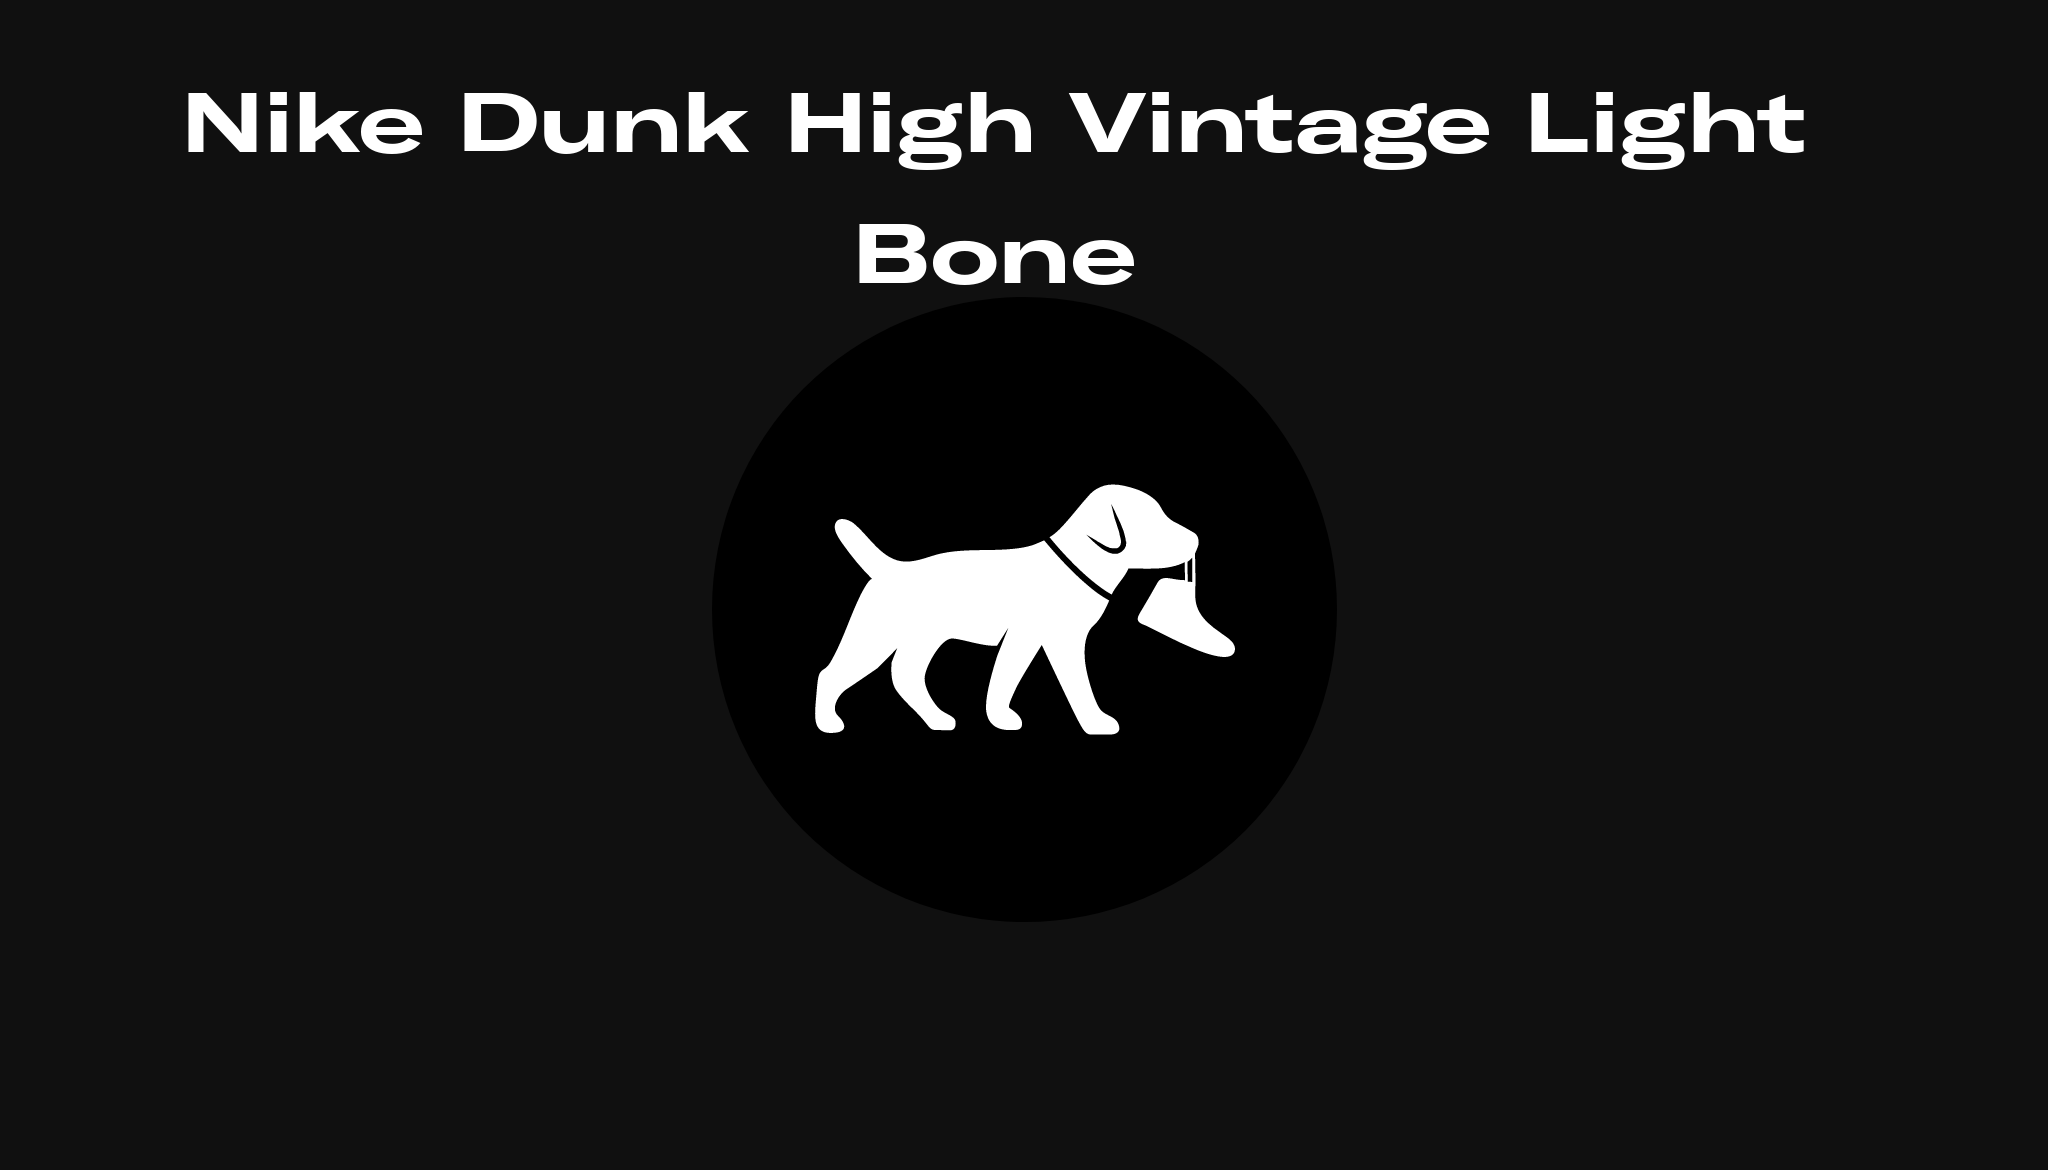 Nike Dunk High Vintage Light Bone, Raffles and Release Date | Sole Retriever